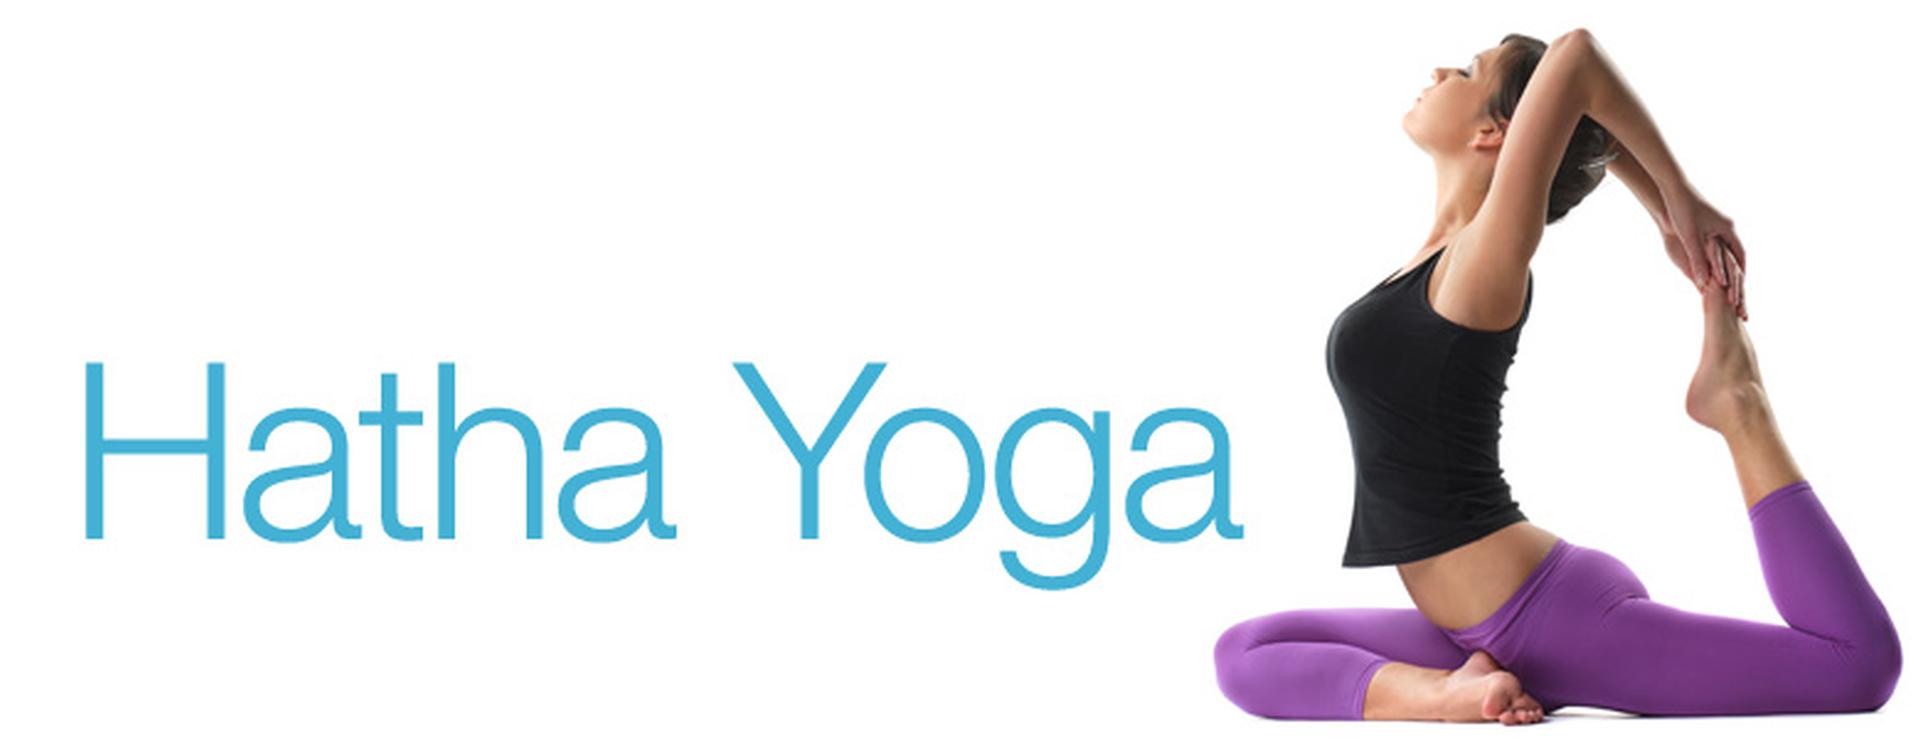 How is Hatha Yoga different from Bikram Yoga? 23